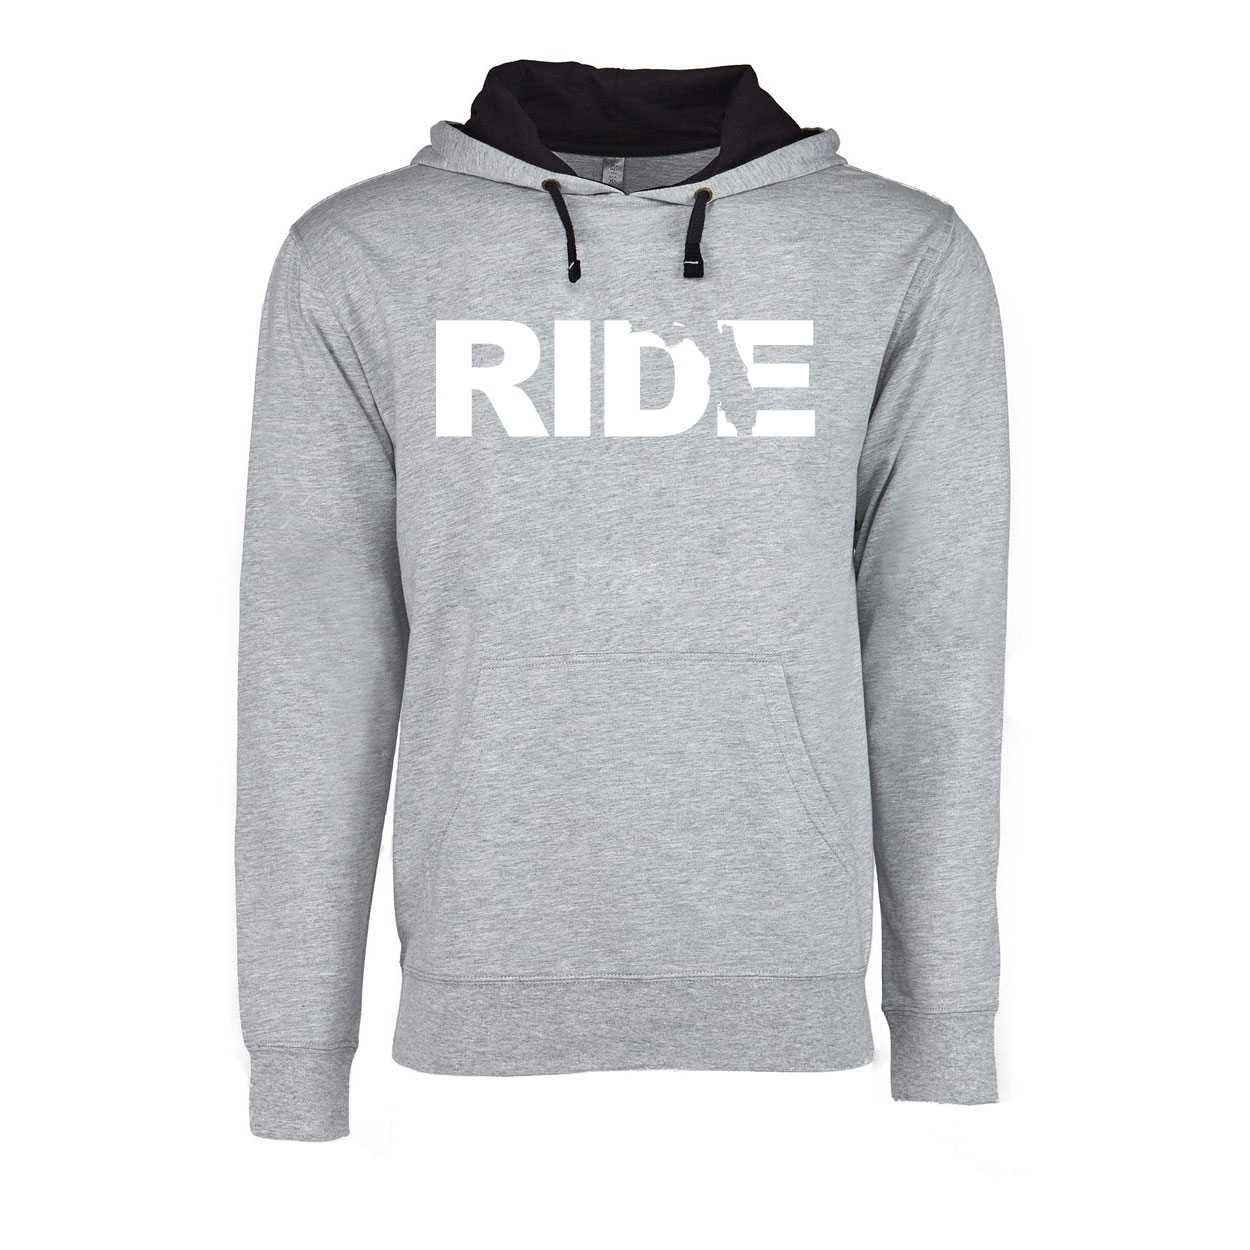 Ride Florida Classic Lightweight Sweatshirt Heather Gray/Black (White Logo)